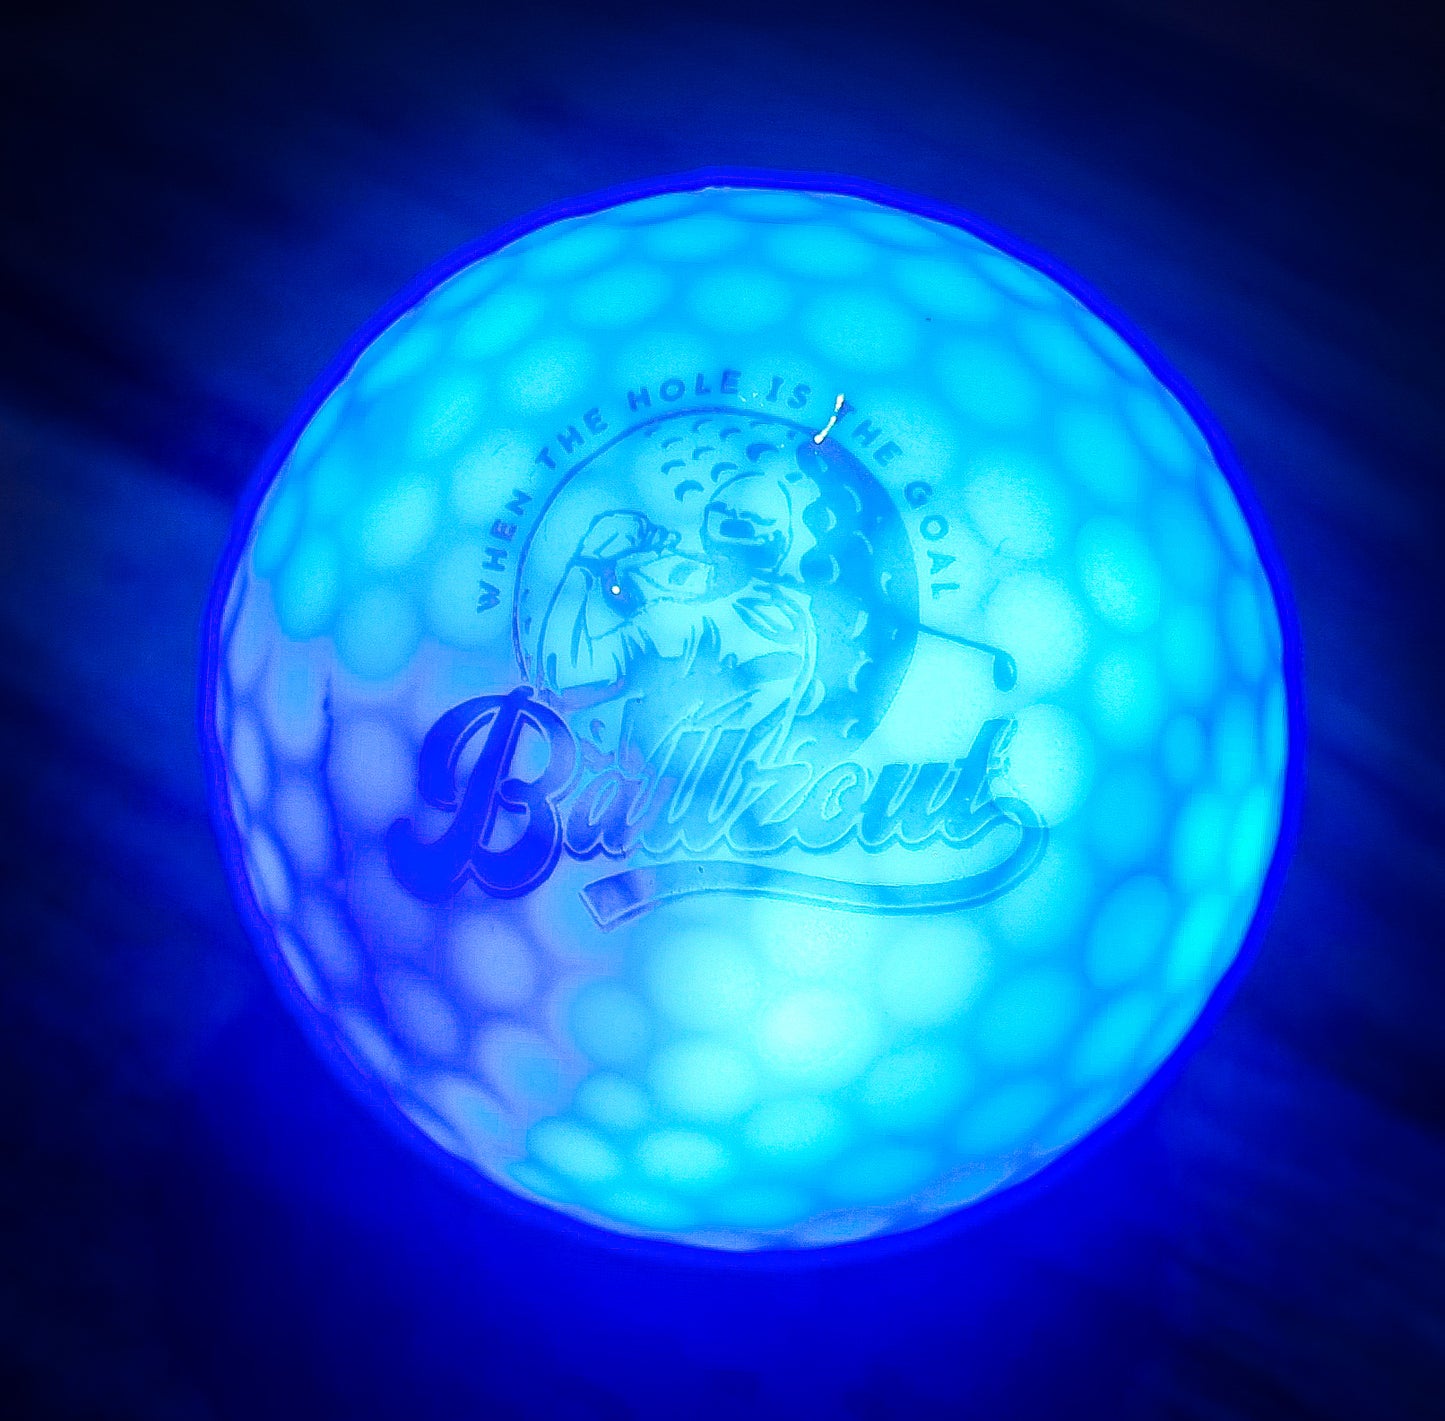 LED LIGHT UP NIGHT GOLF BALLS (Single colours - 6 colour range)